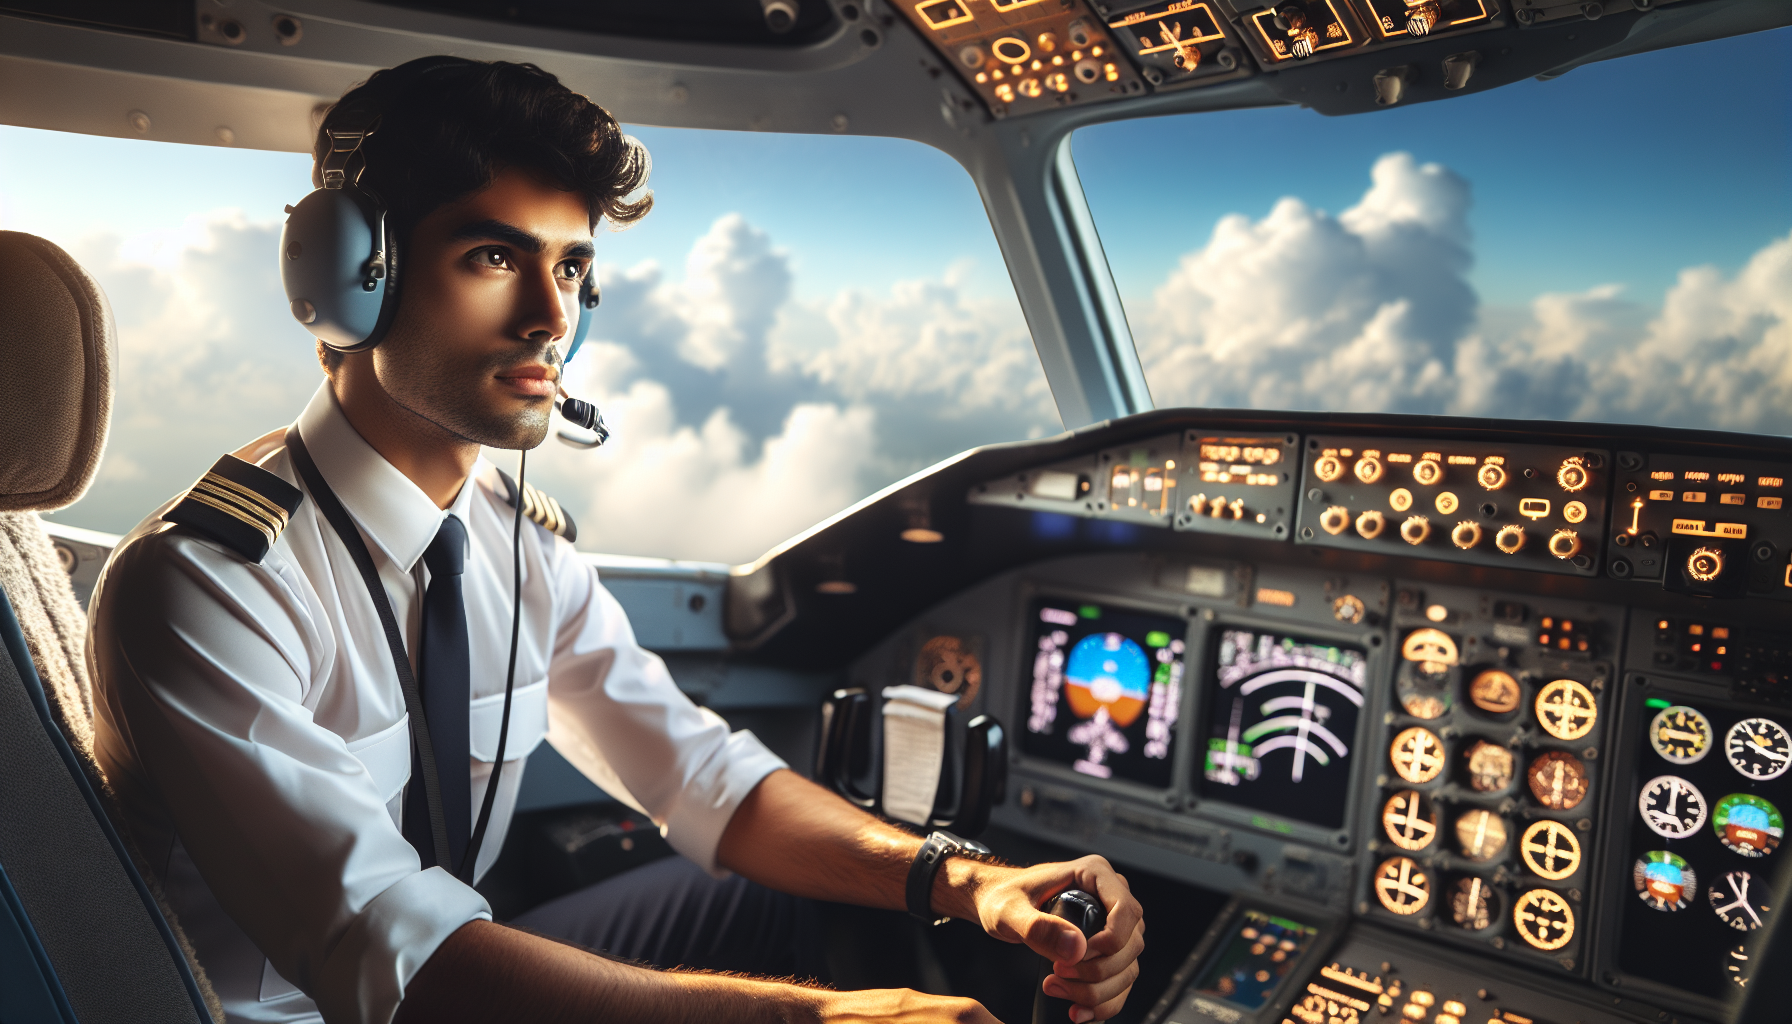 Commercial pilot license requirements